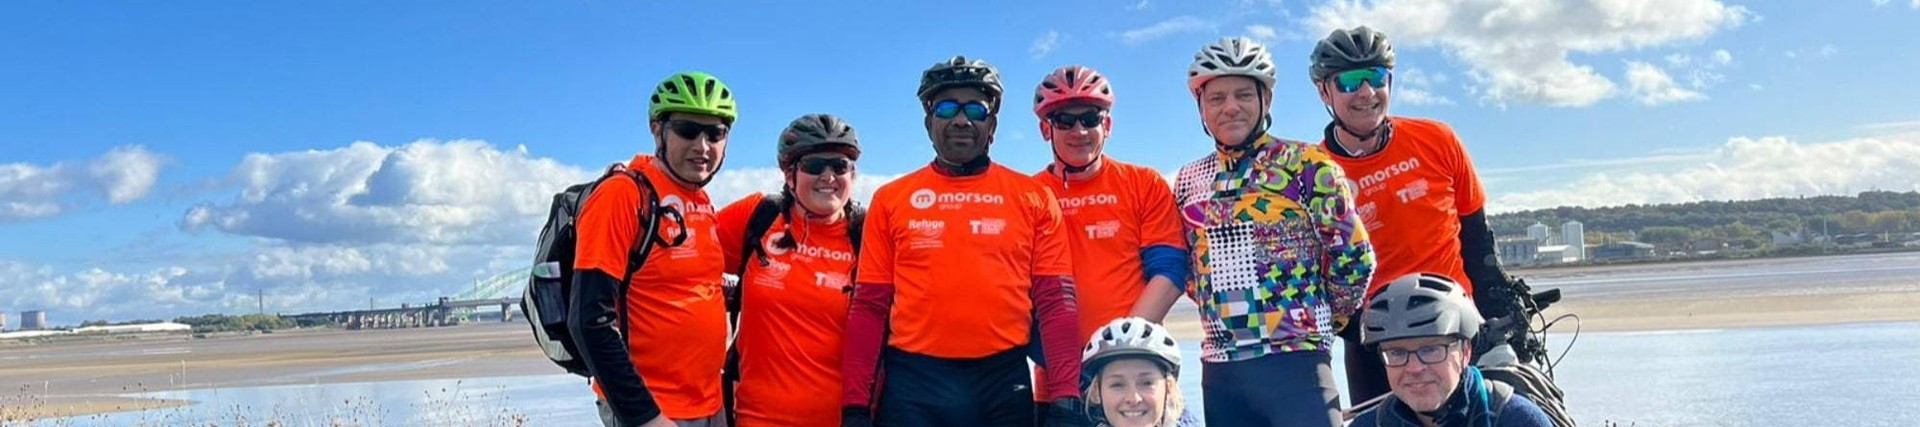 Morson employees taking part in charity bike ride